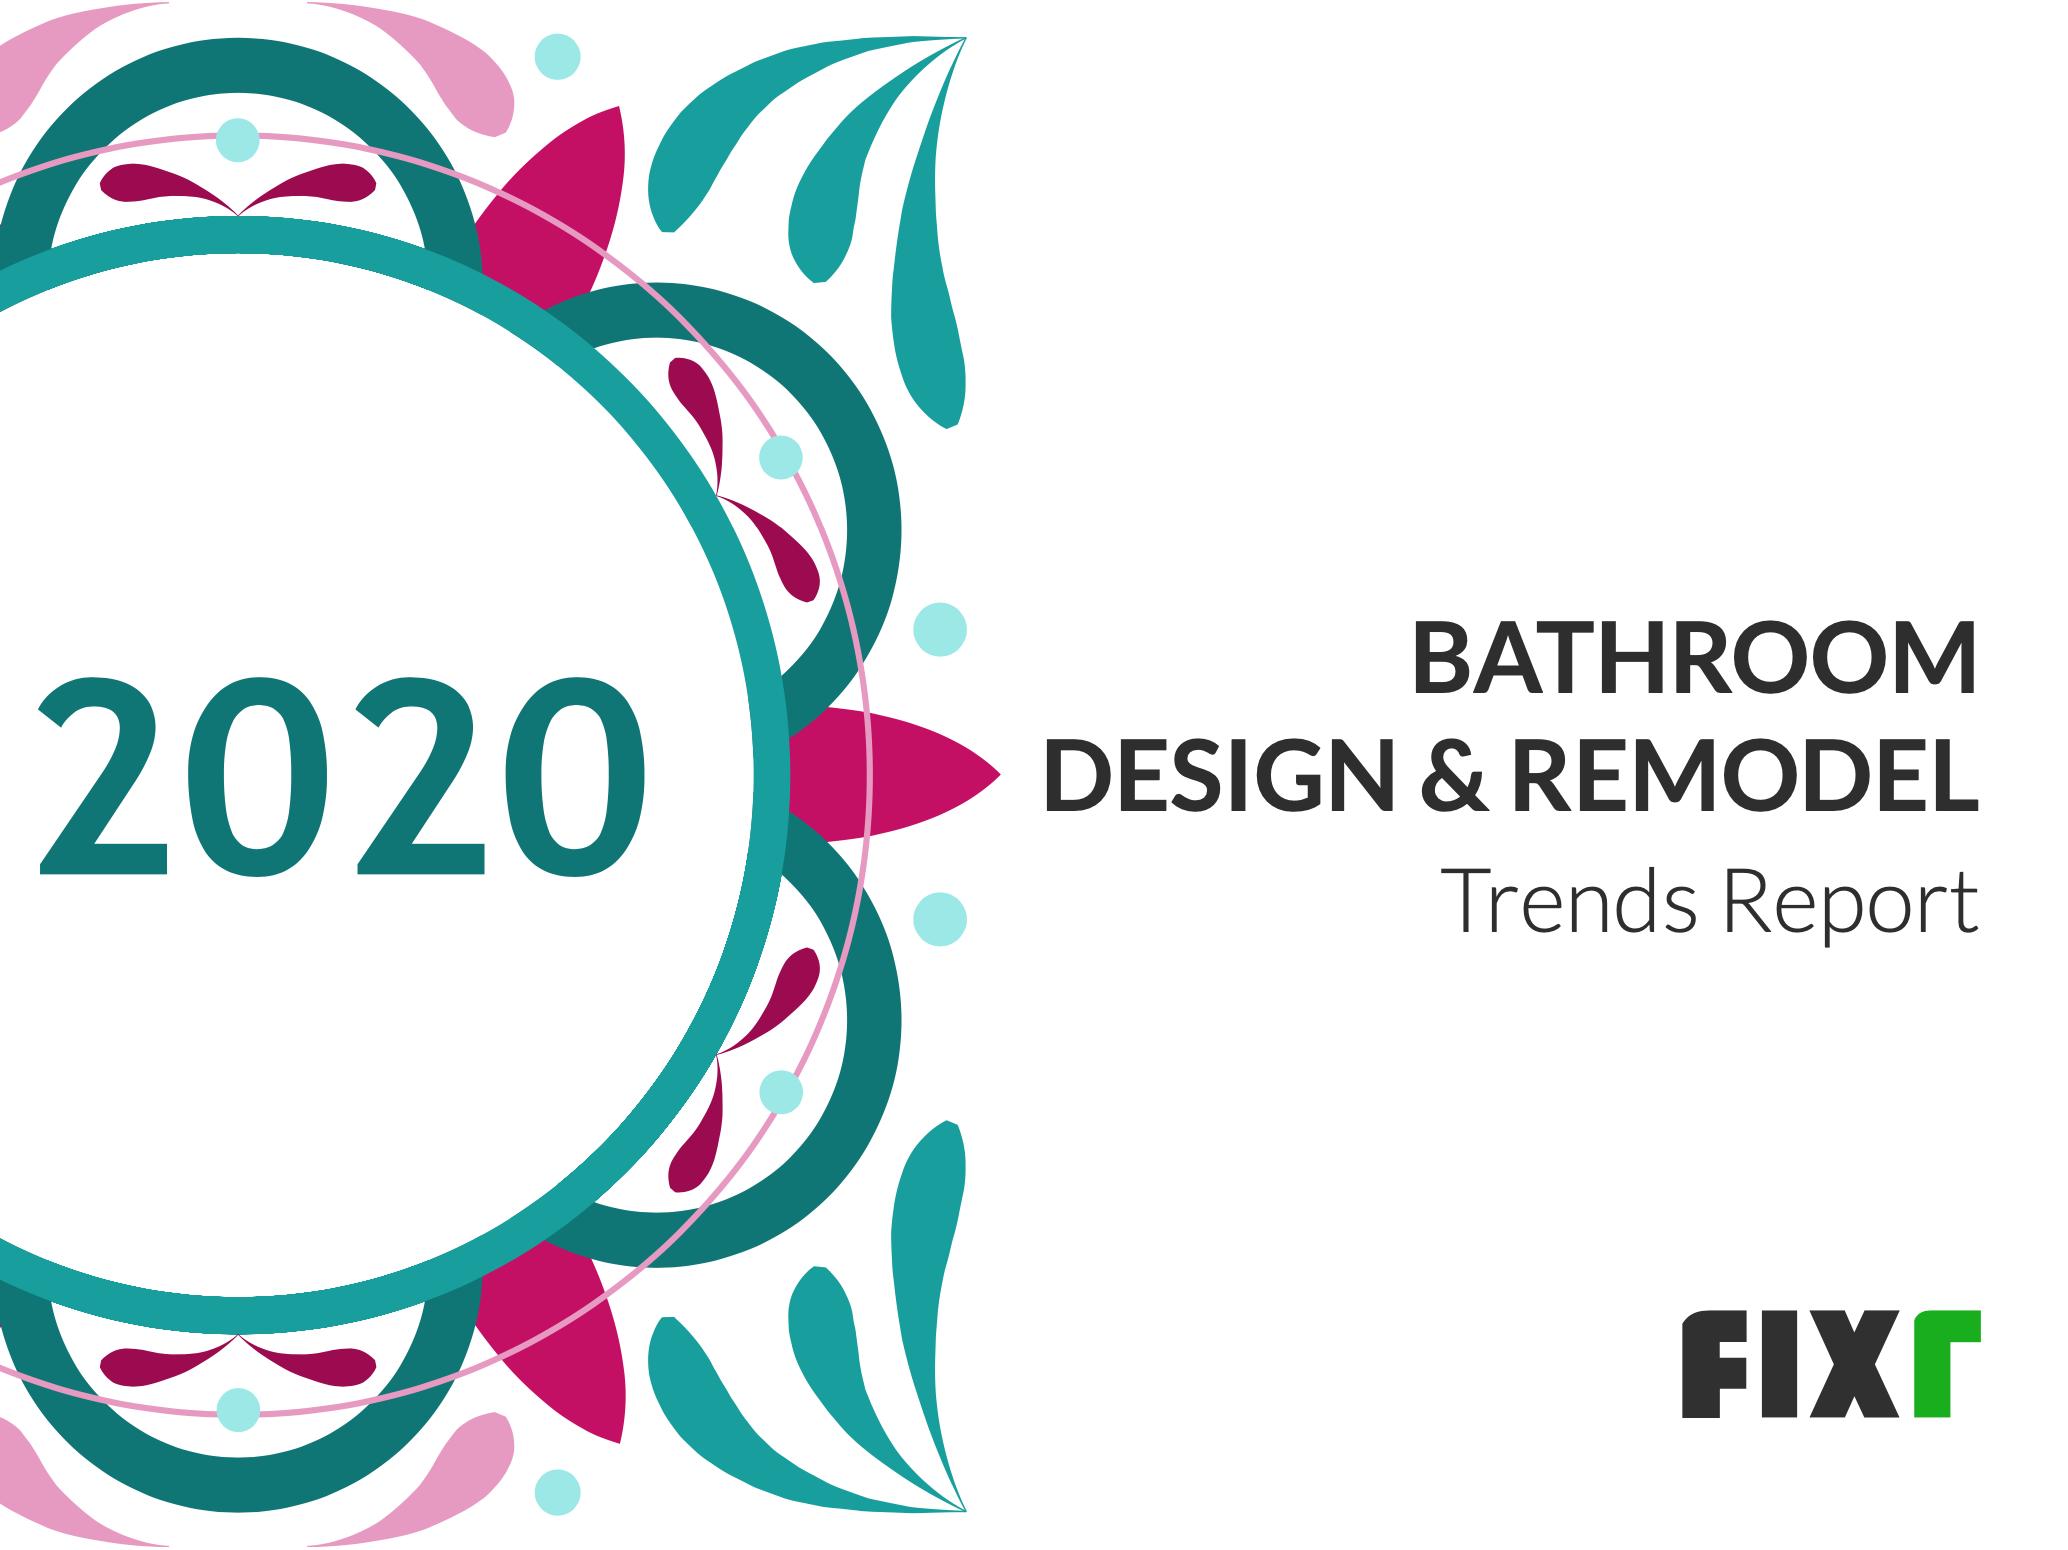 Bathroom Design & Remodel Trends in 2020